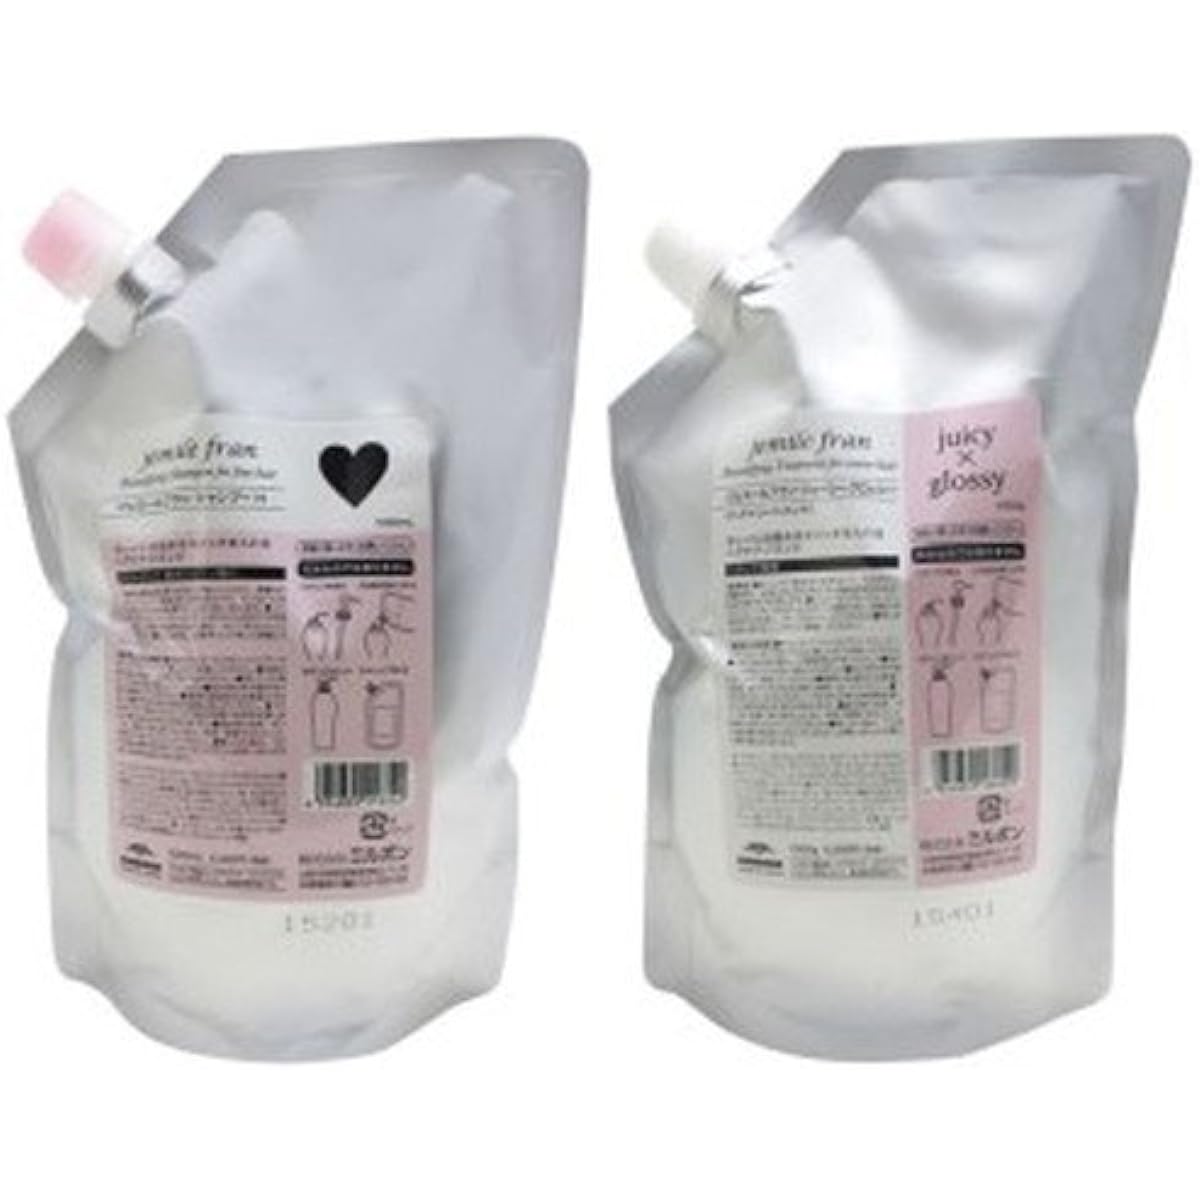 Milbon Gemile Fran Shampoo Heart H 1000ml + Treatment Juicy Glossy 1000g Refill Set